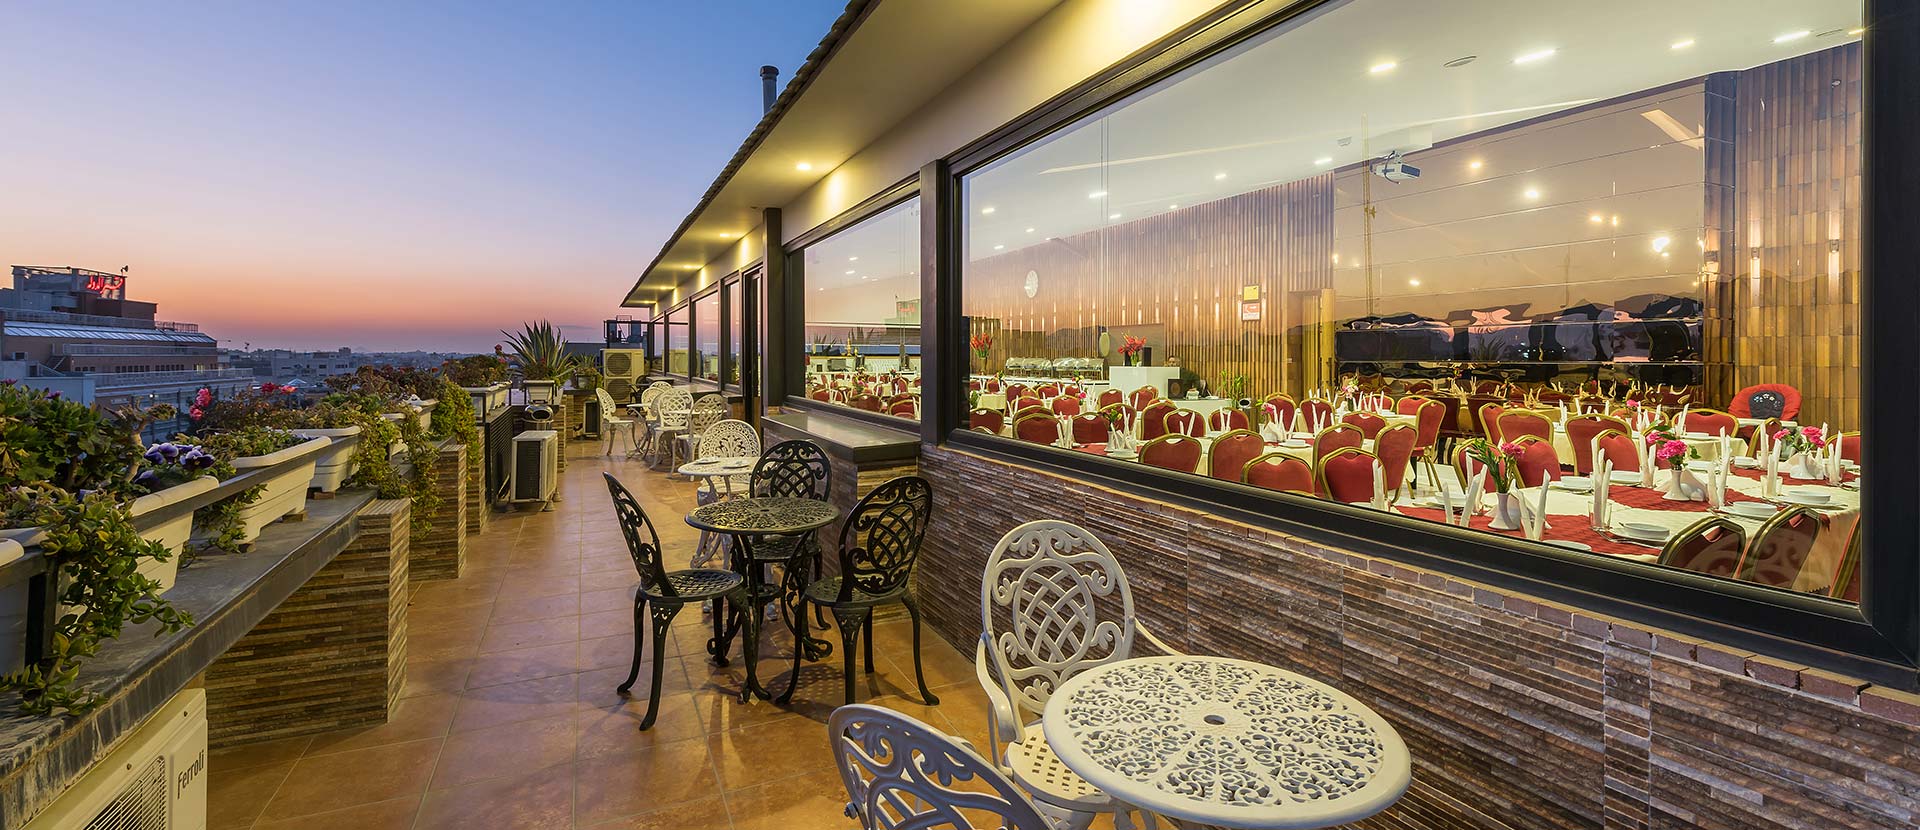 رستوران بام هتل شیخ بهایی